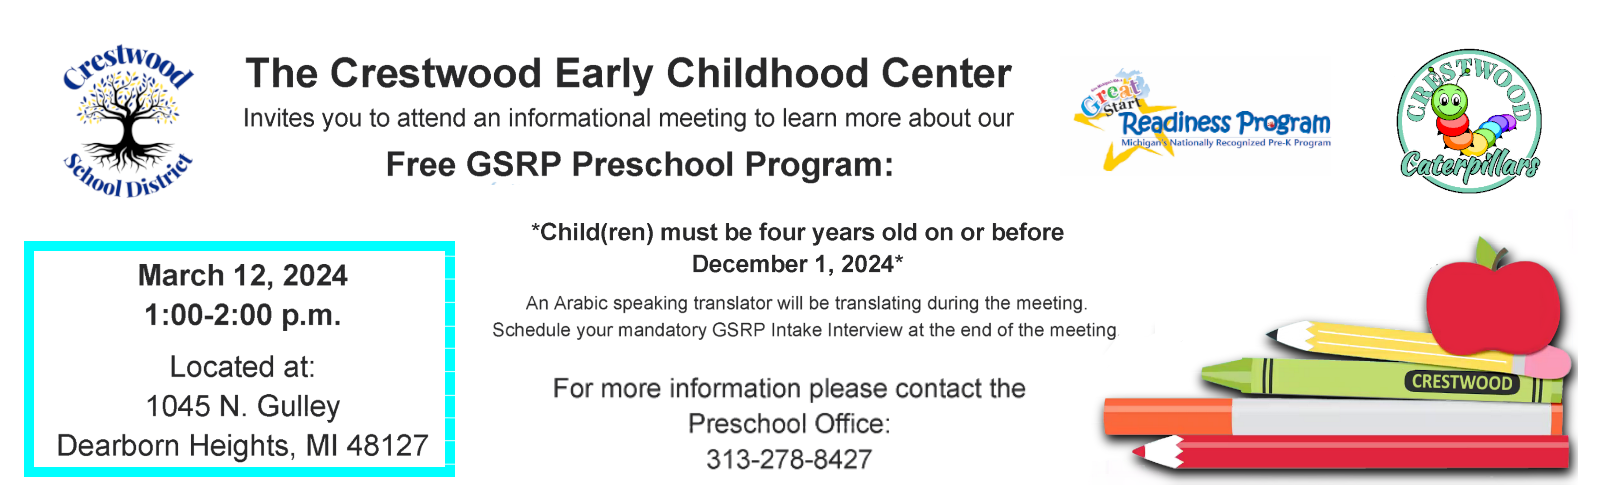 Free GSRP Preschool Program Meeting. March 12, 2024, 1PM to 2PM, 1045 N. Gulley, Dearborn Hights, MI 48127